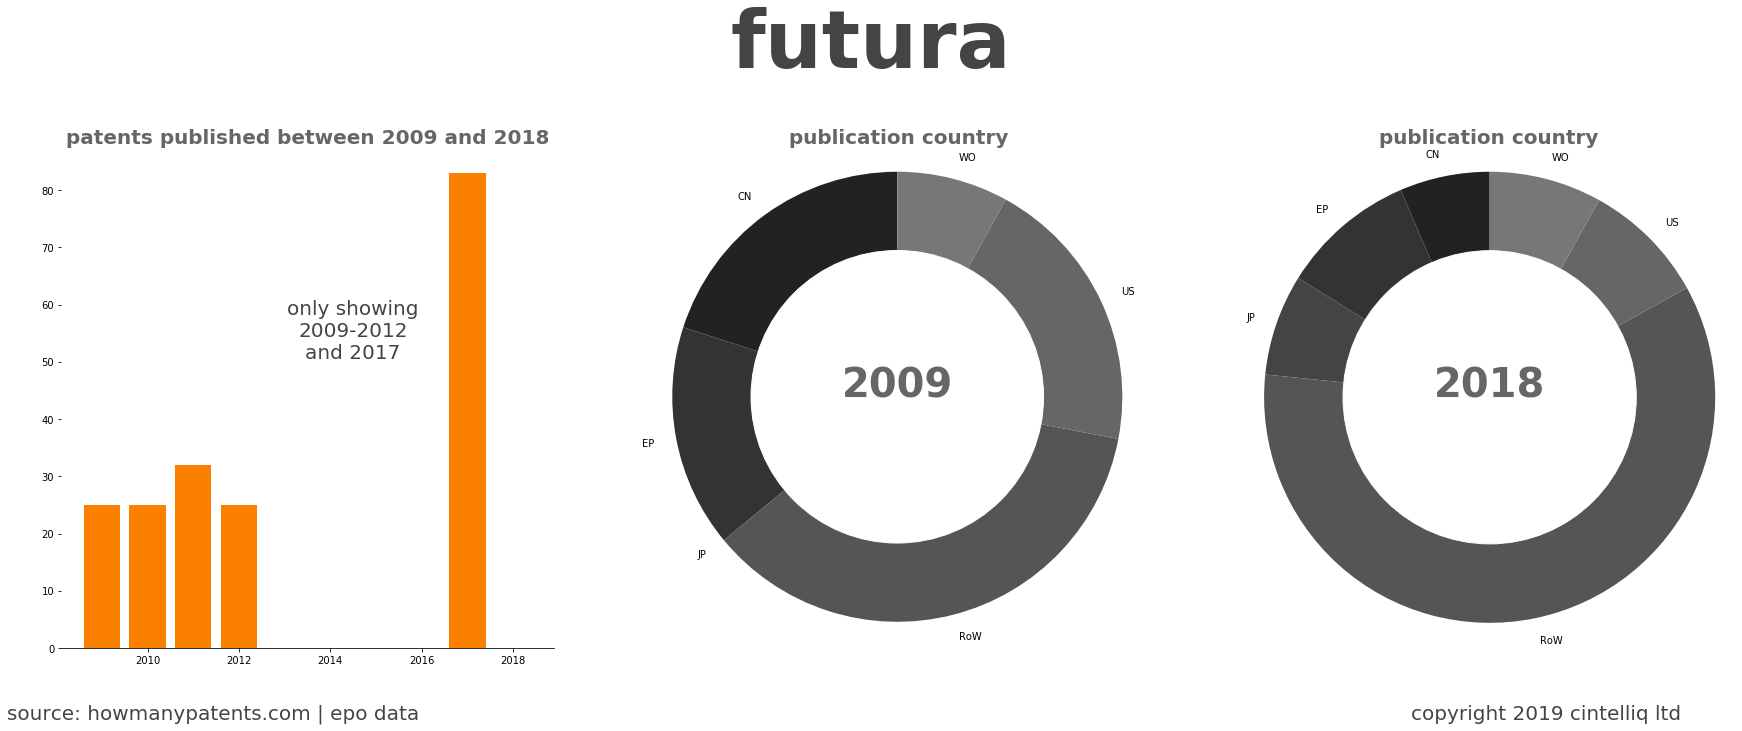 summary of patents for Futura